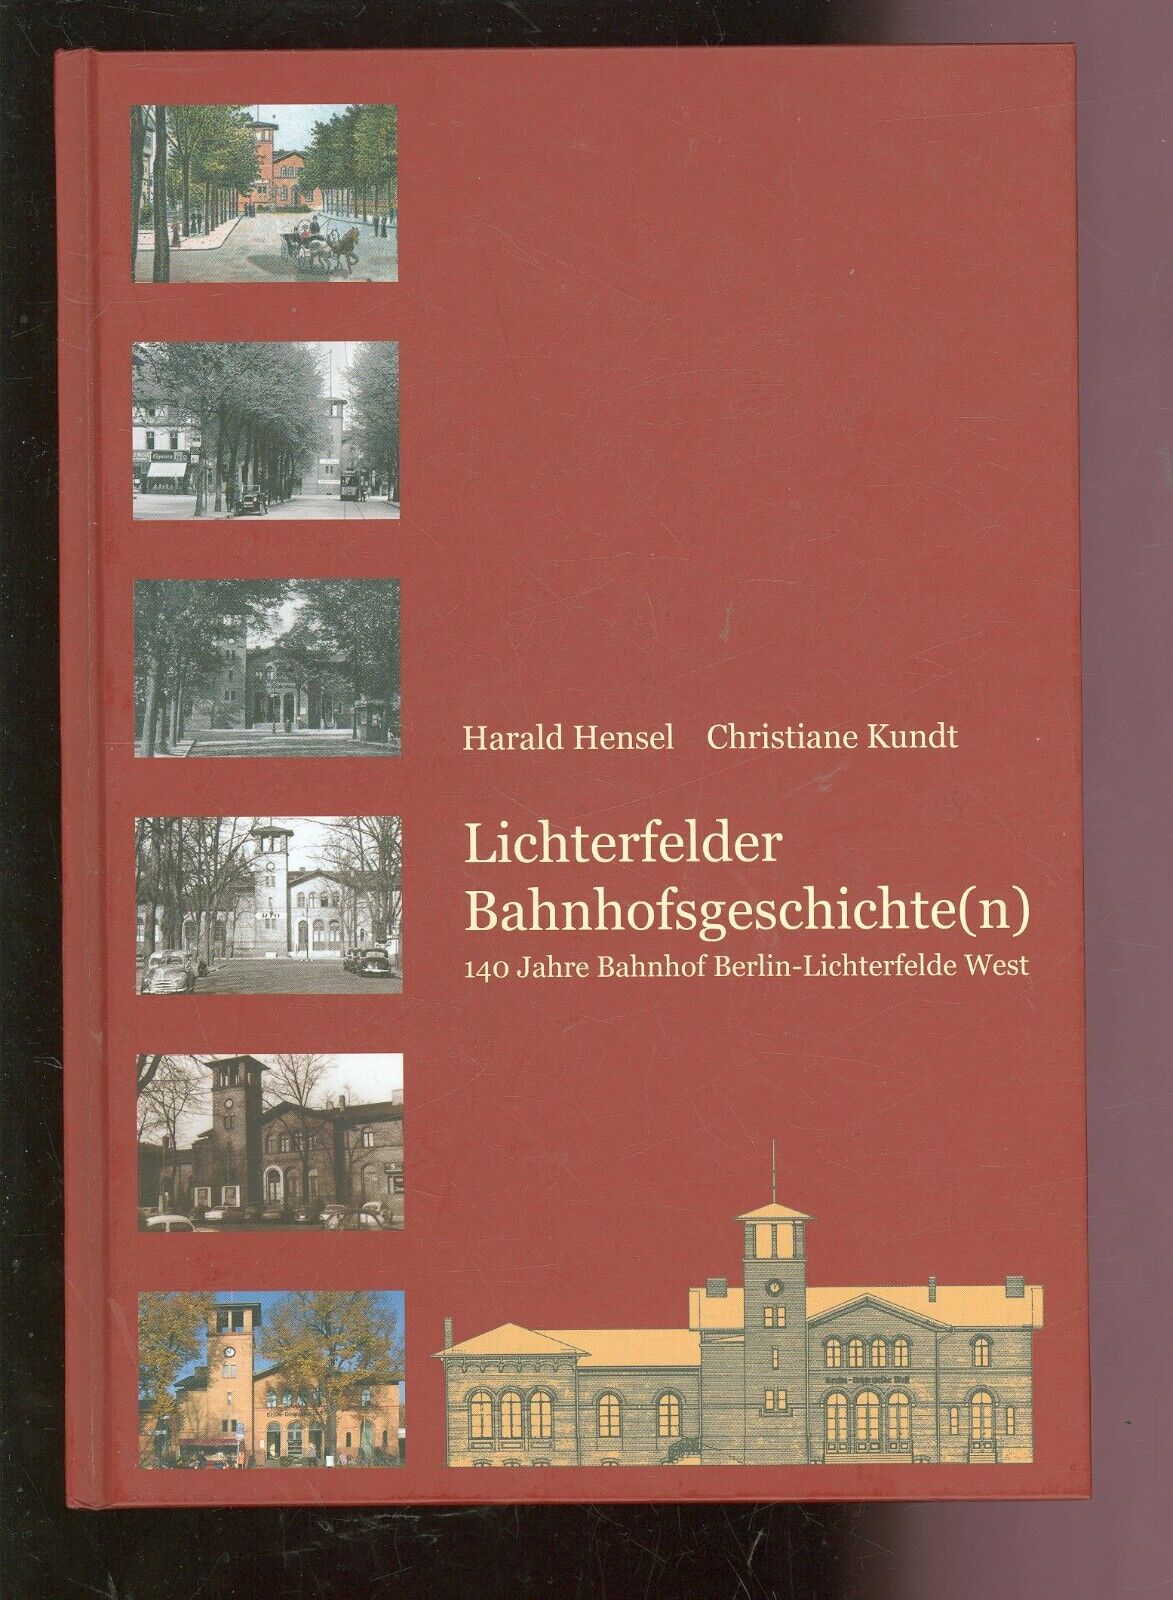 Lichterfeld station history(s) 140 years Berlin-Lichterfelde West station